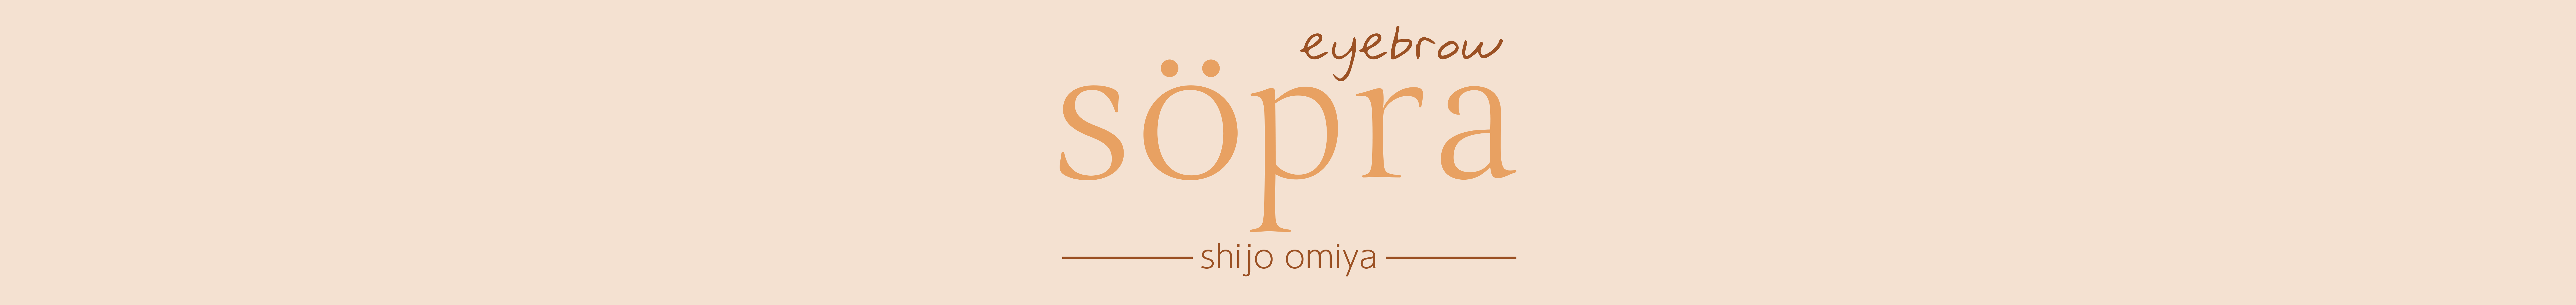 eyebrow söpra shijo omiya logo